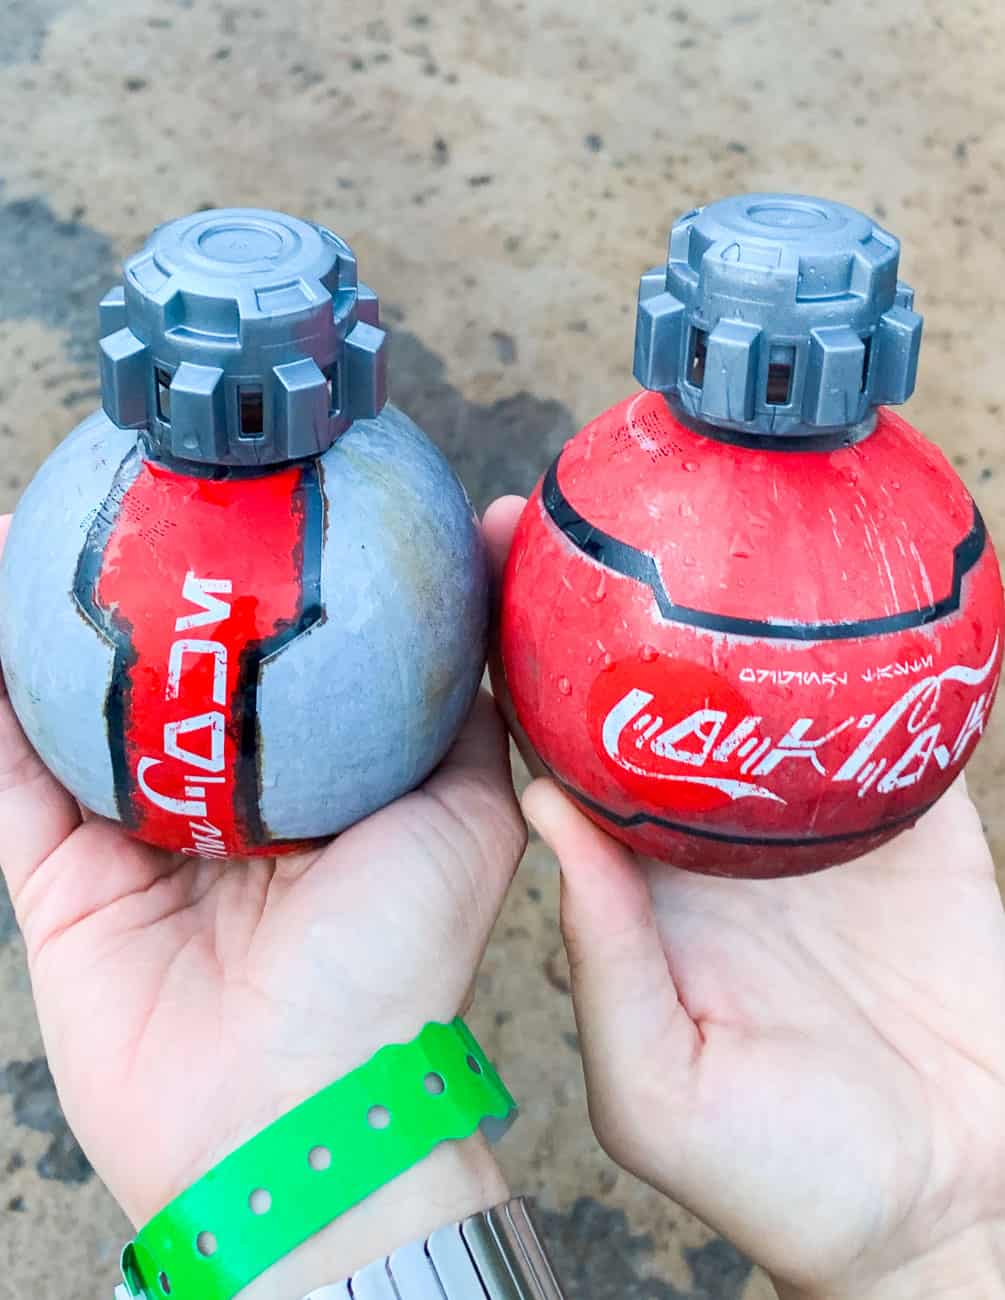 reasons to visit Star wars galaxy's edge coke bottles thermal detonators